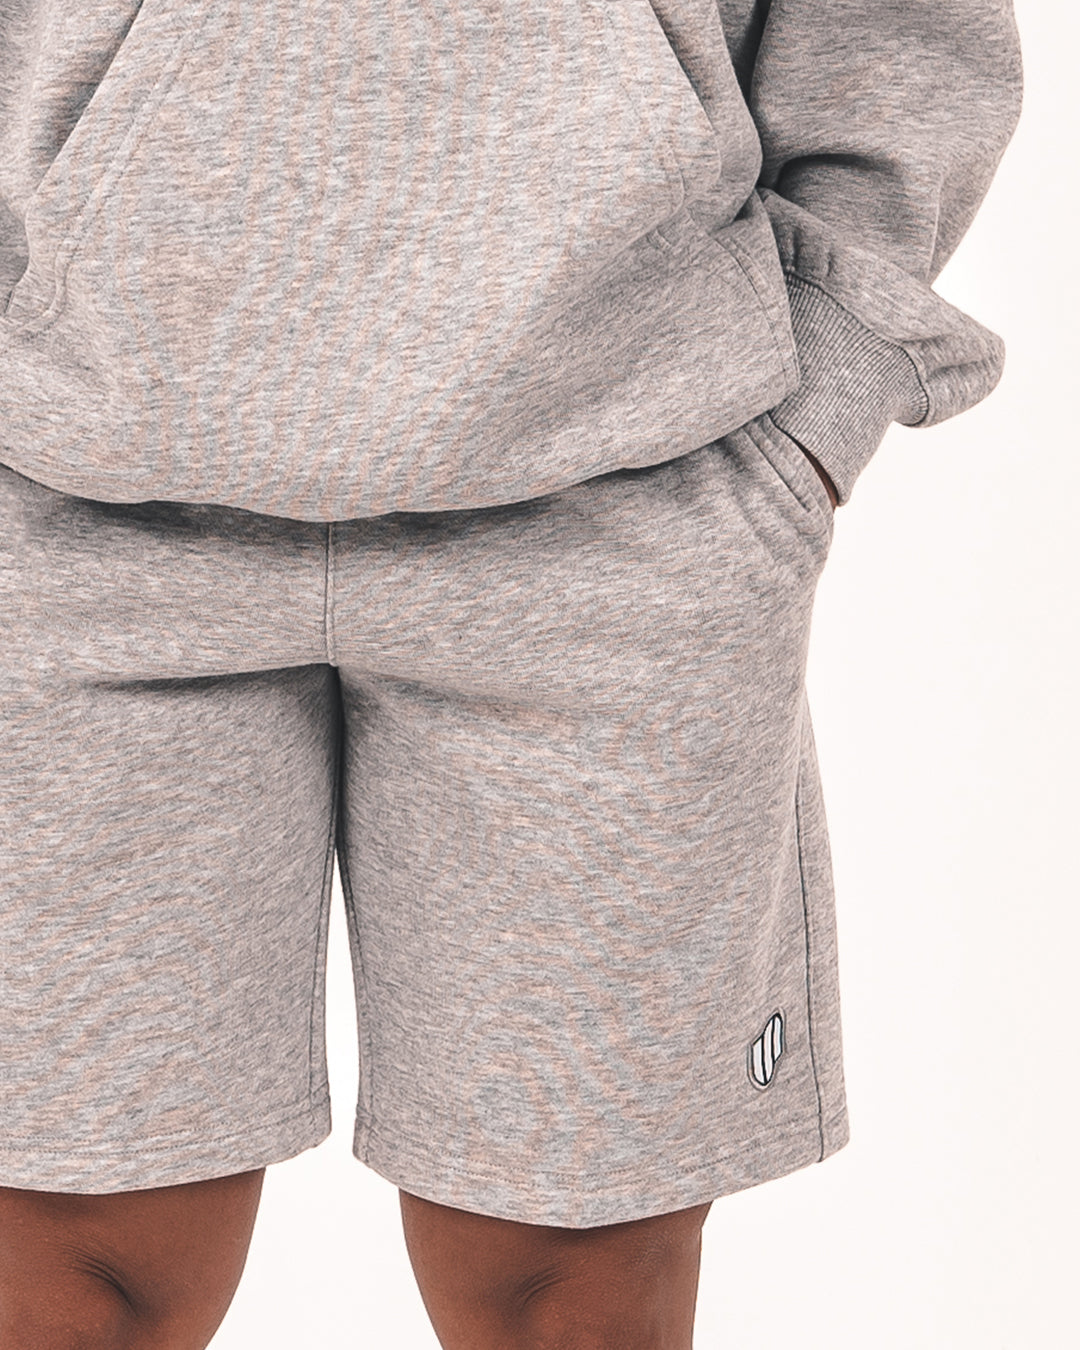 PFC: 002-3 - Women's Sweatshorts - Grey Marl